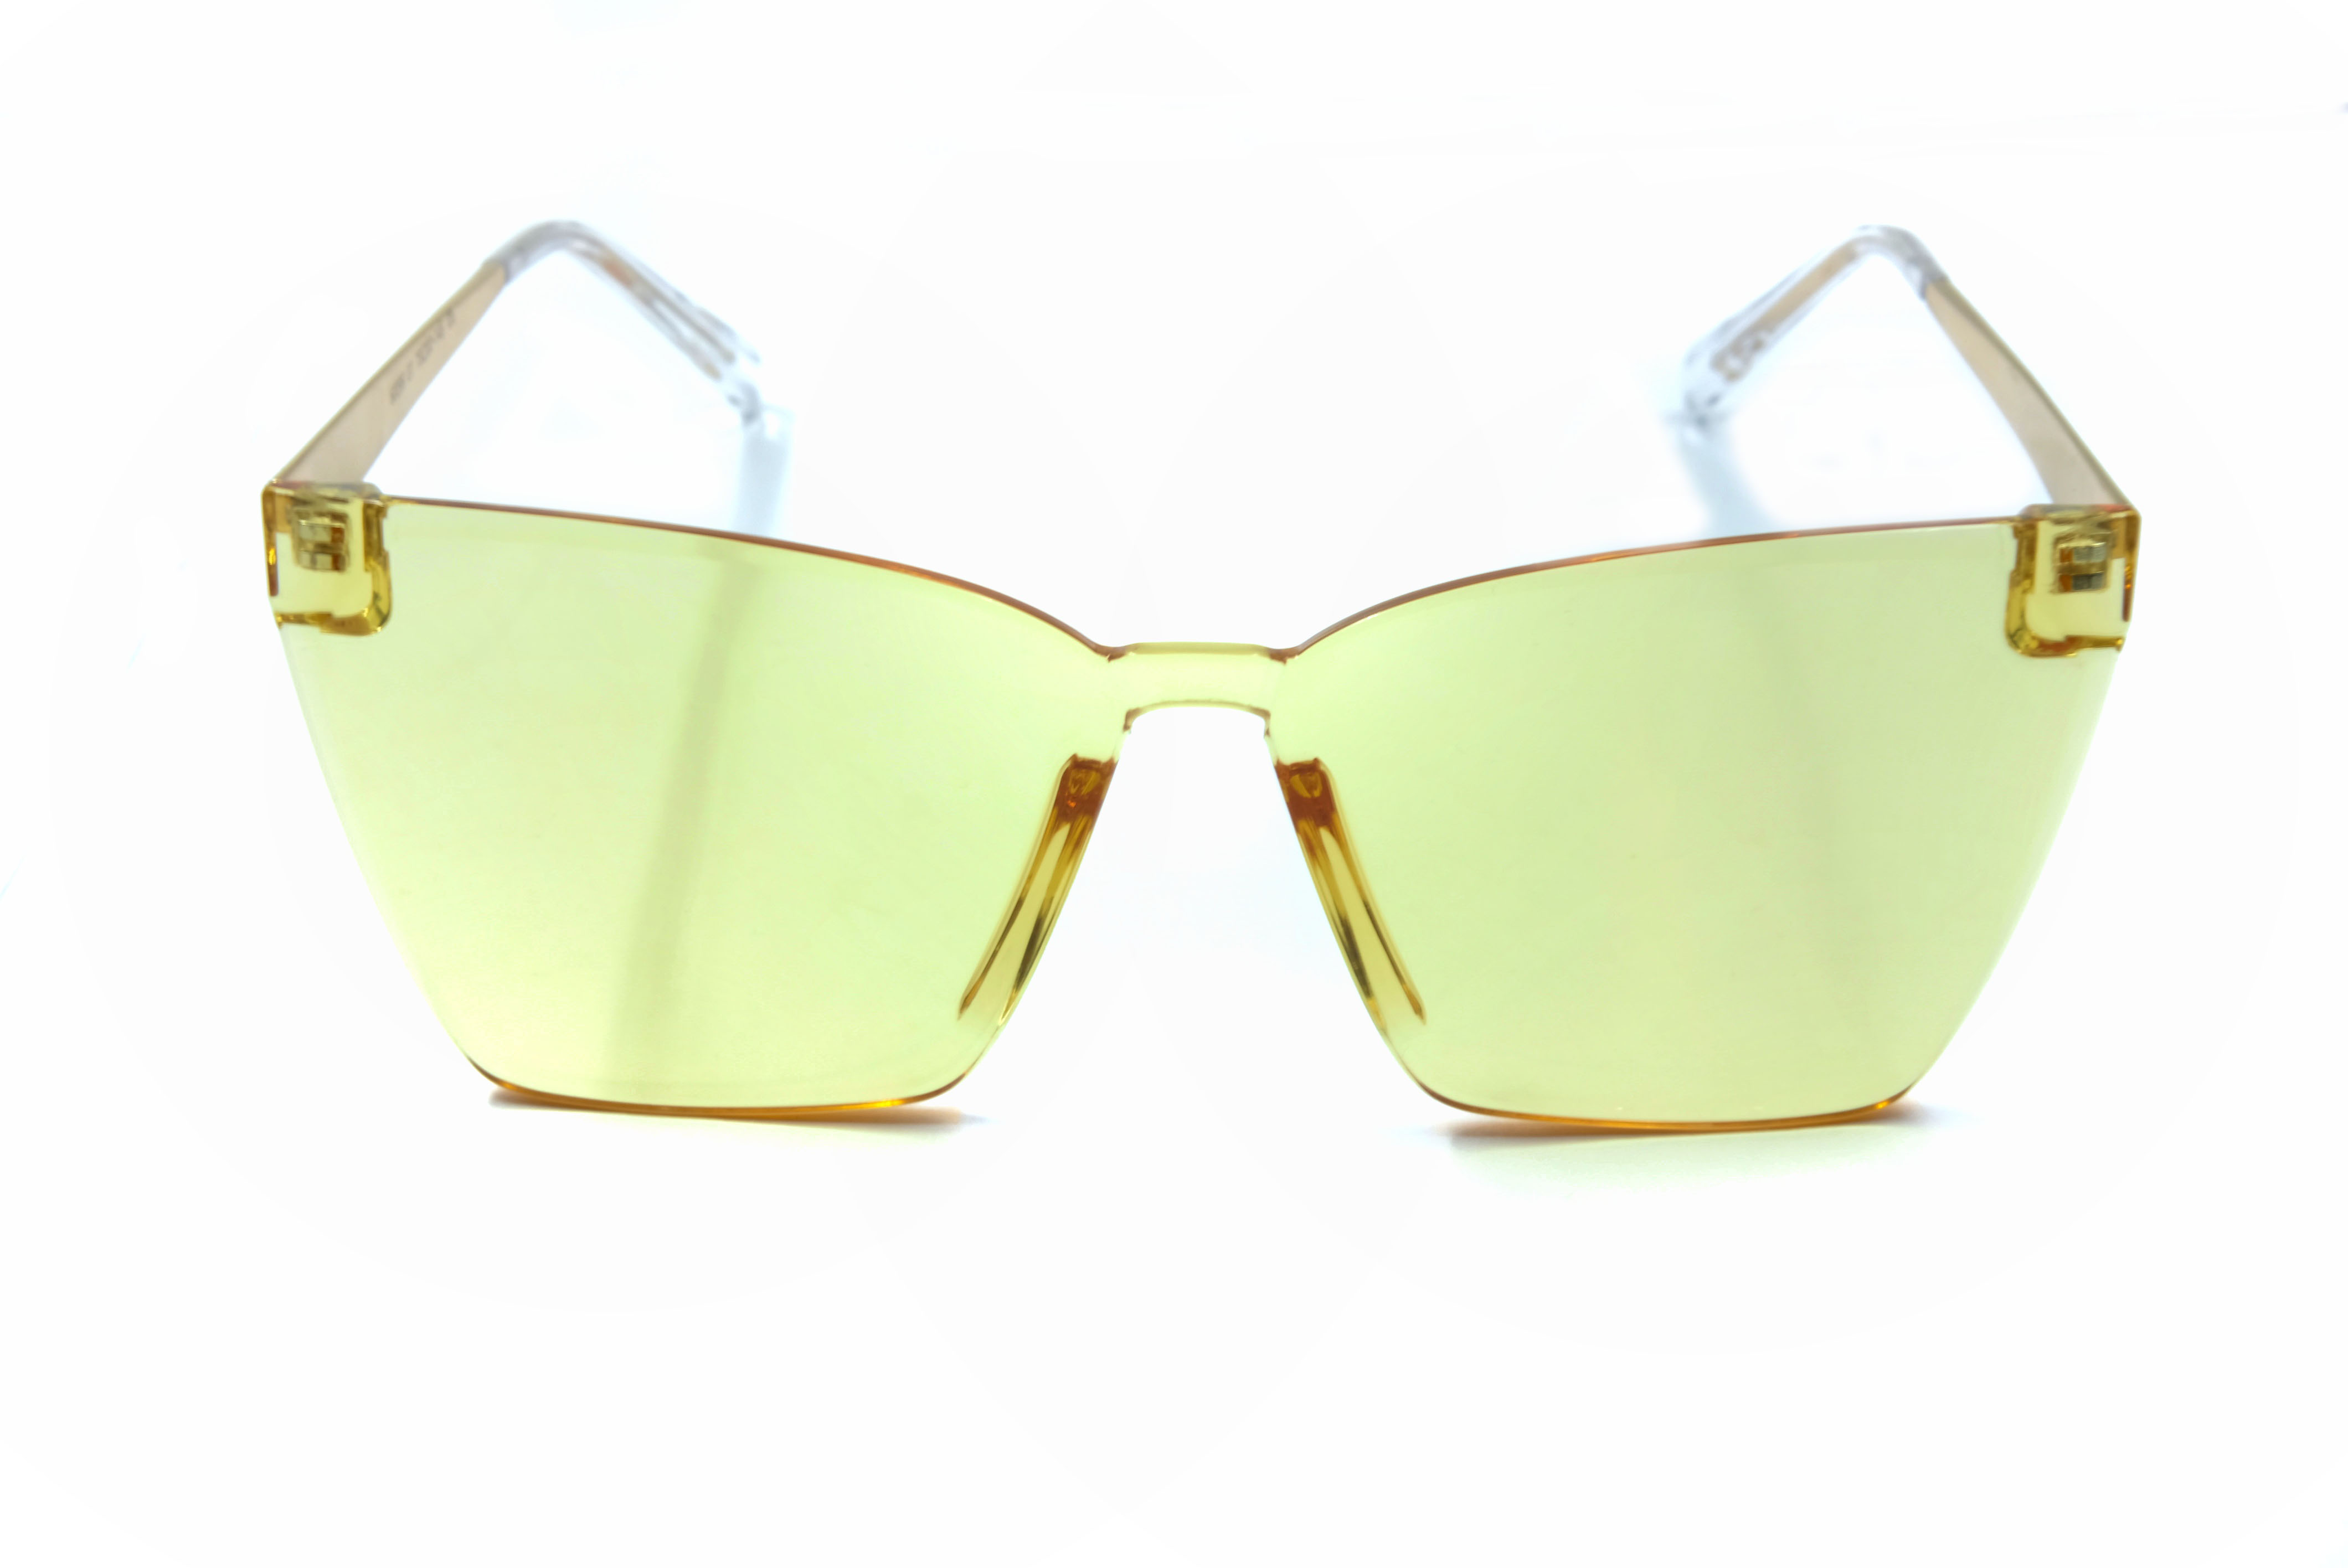 Newest Fashion Women Square Oversized Sunglasses Bespoke Glasses Factory China